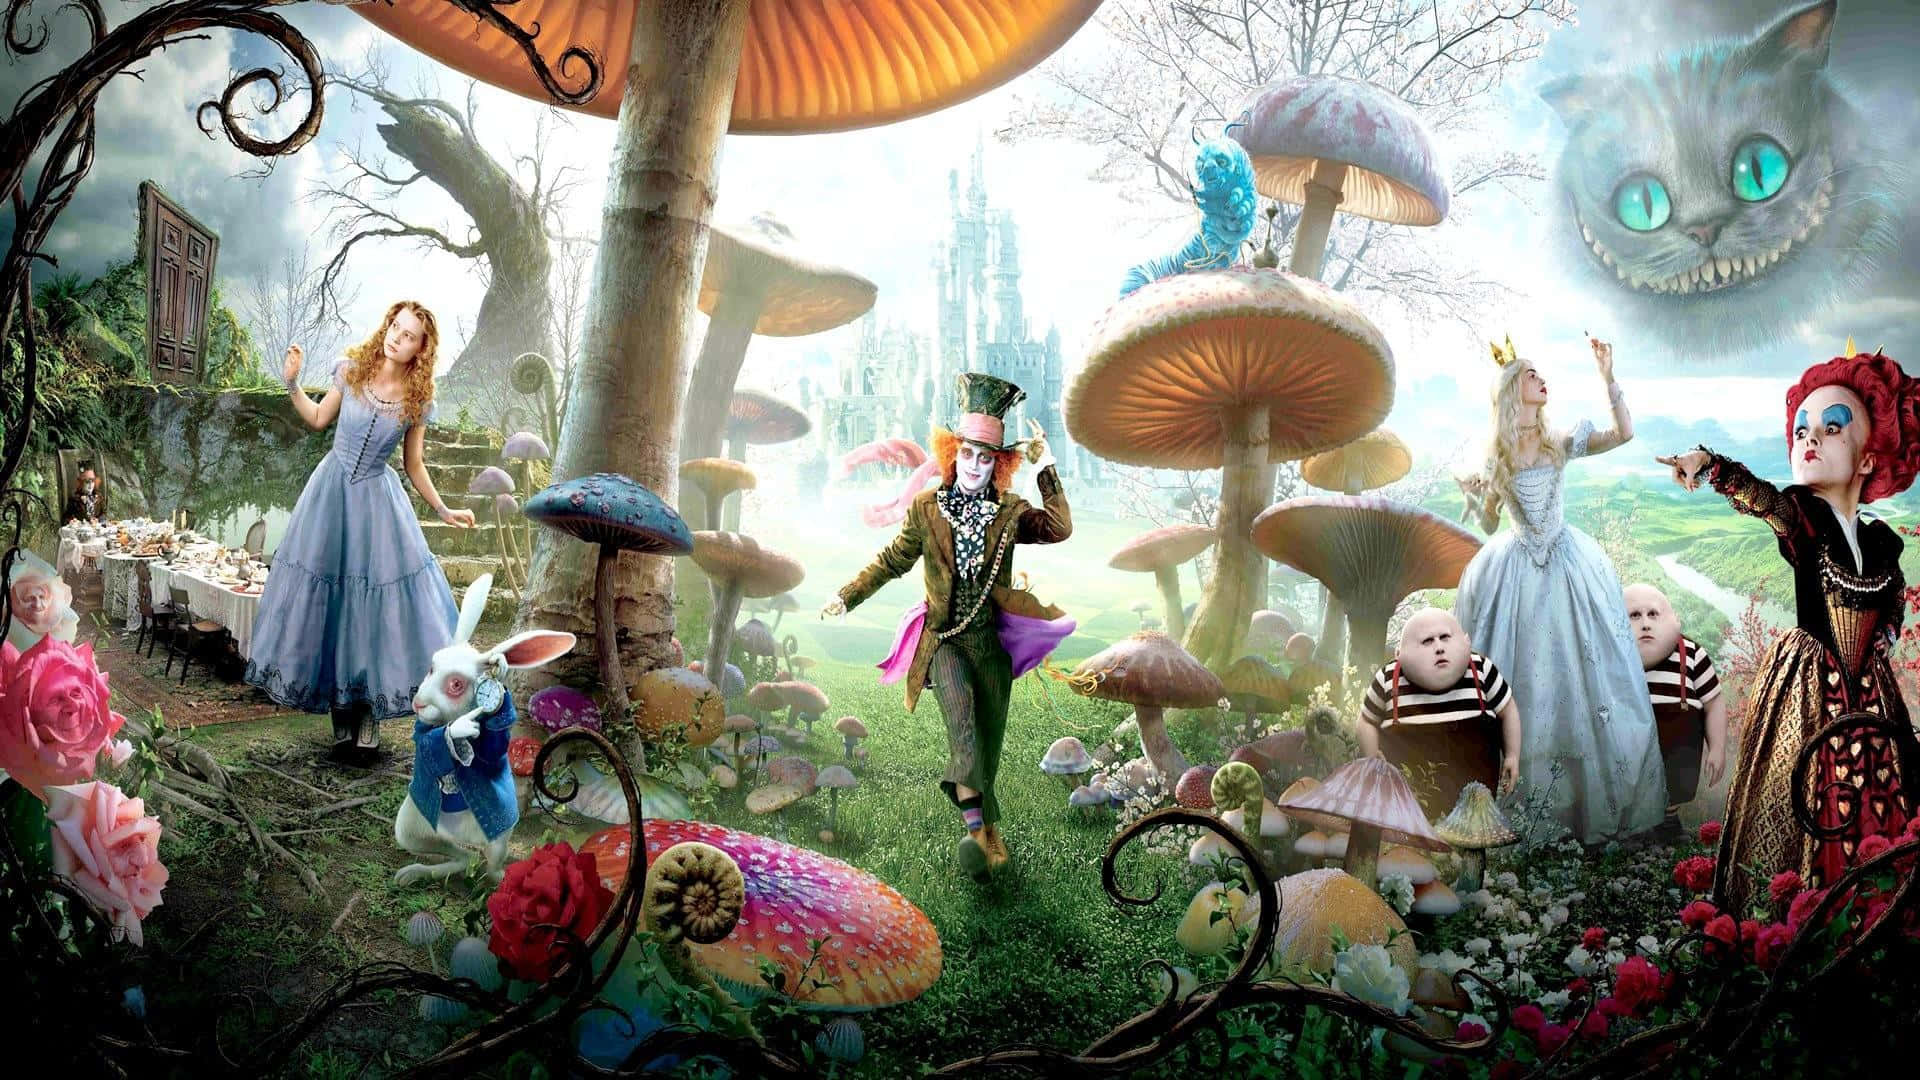 Welcome to Wonderland!